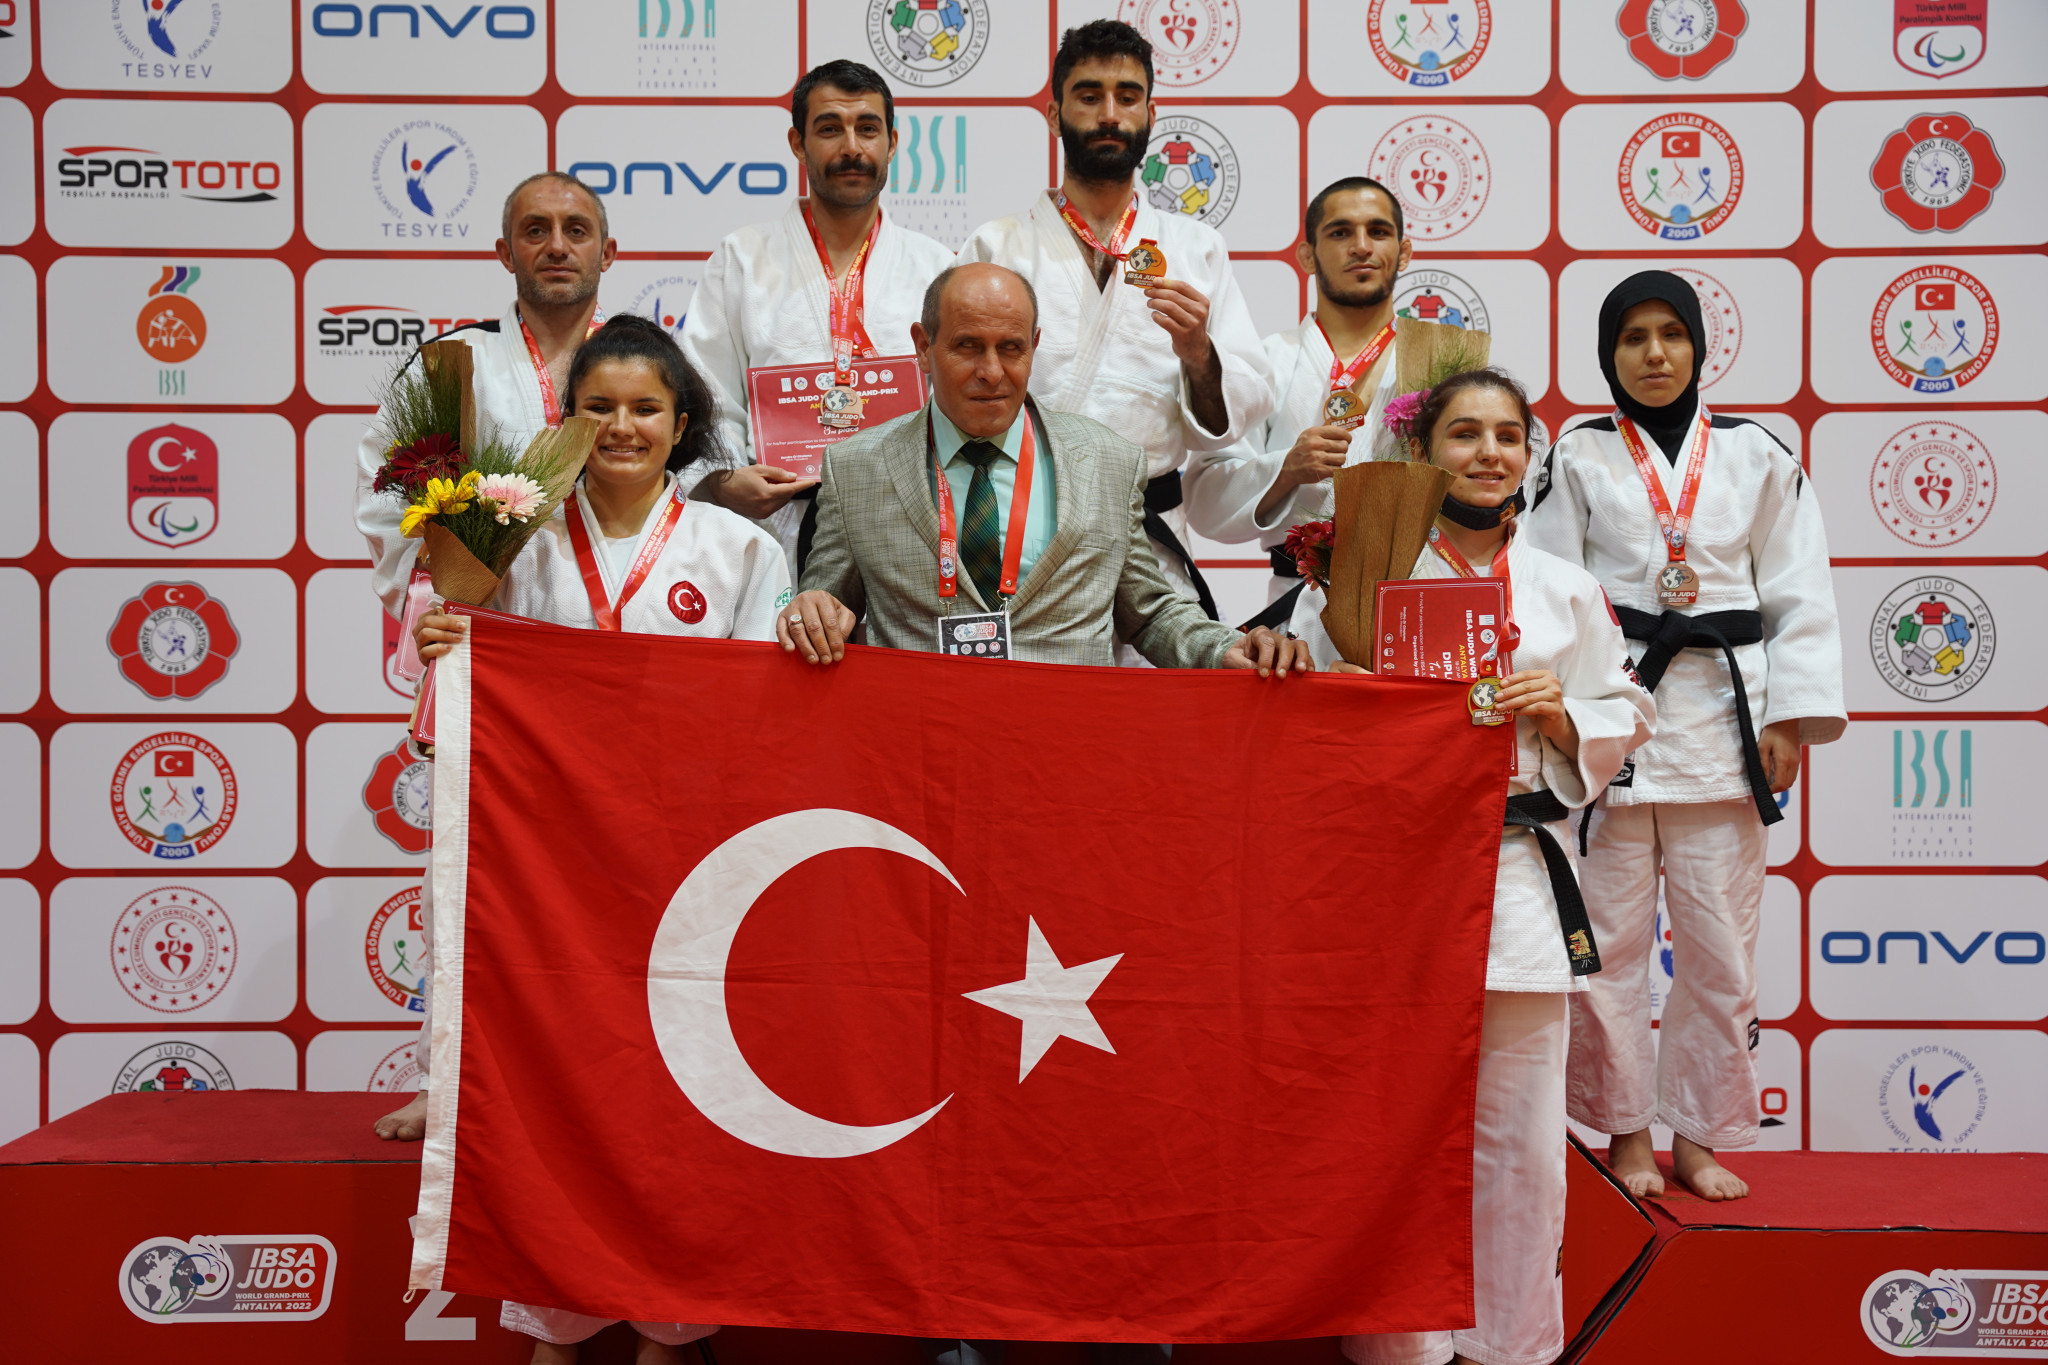 Çiftçi, Uslu and Ozalp strike gold for hosts Turkey at IBSA Grand Prix in Antalya